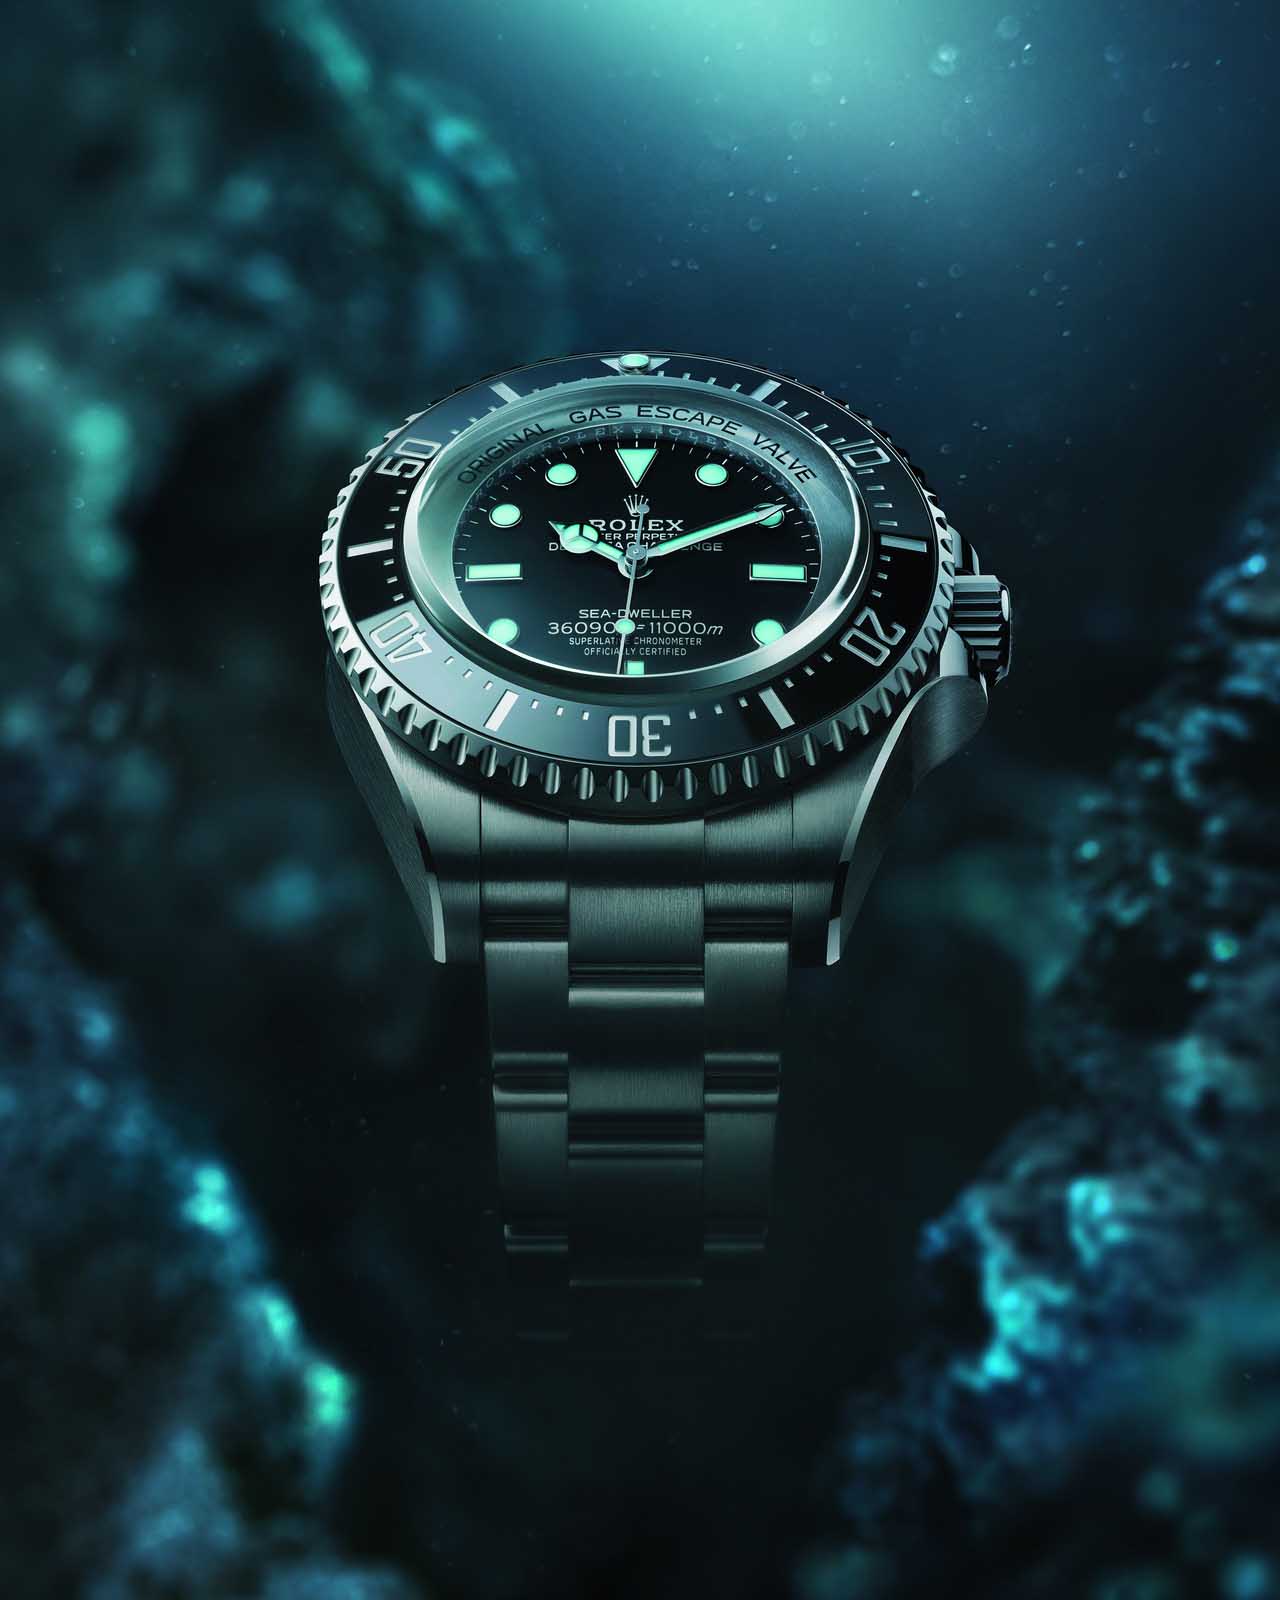 Rolex Oyster Perpetual Deepsea Challenge RLX Titanium